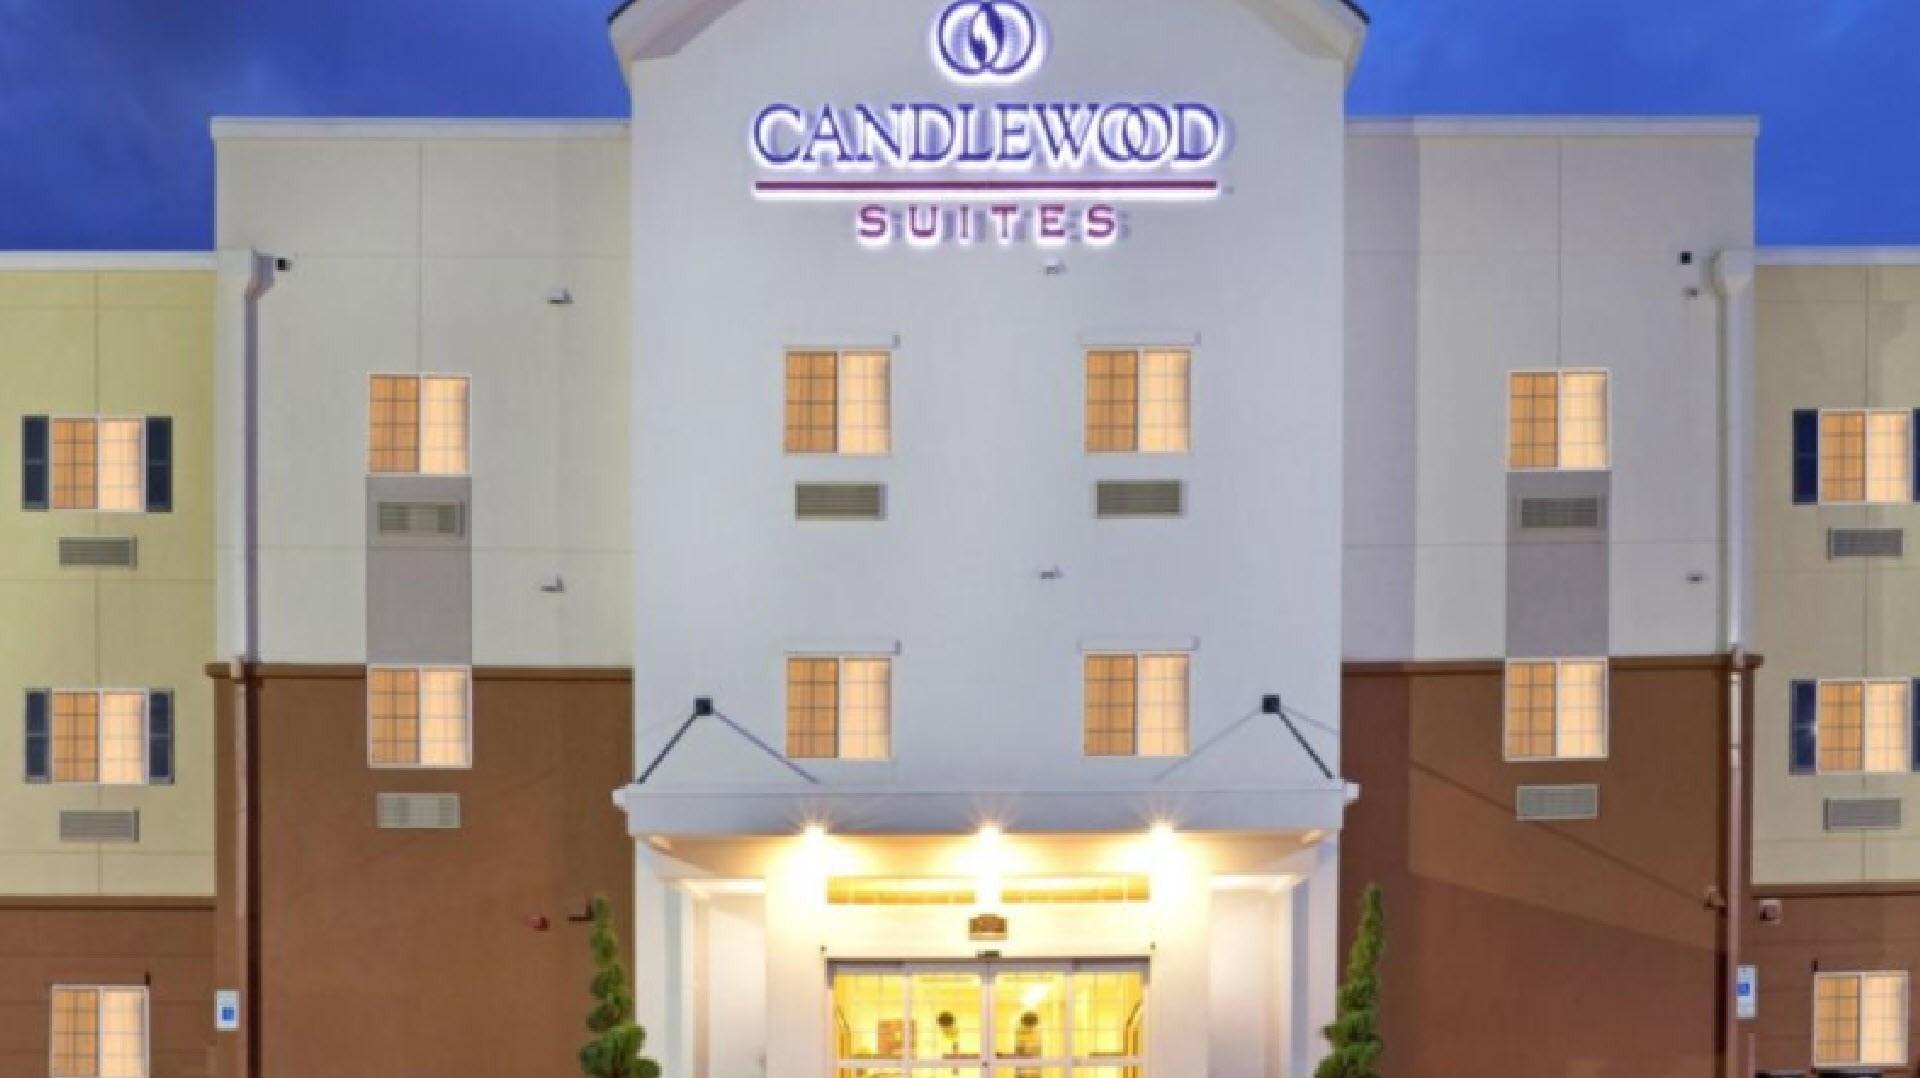 Candlewood Suites Miami Intl Airport - 36th St in Miami, FL